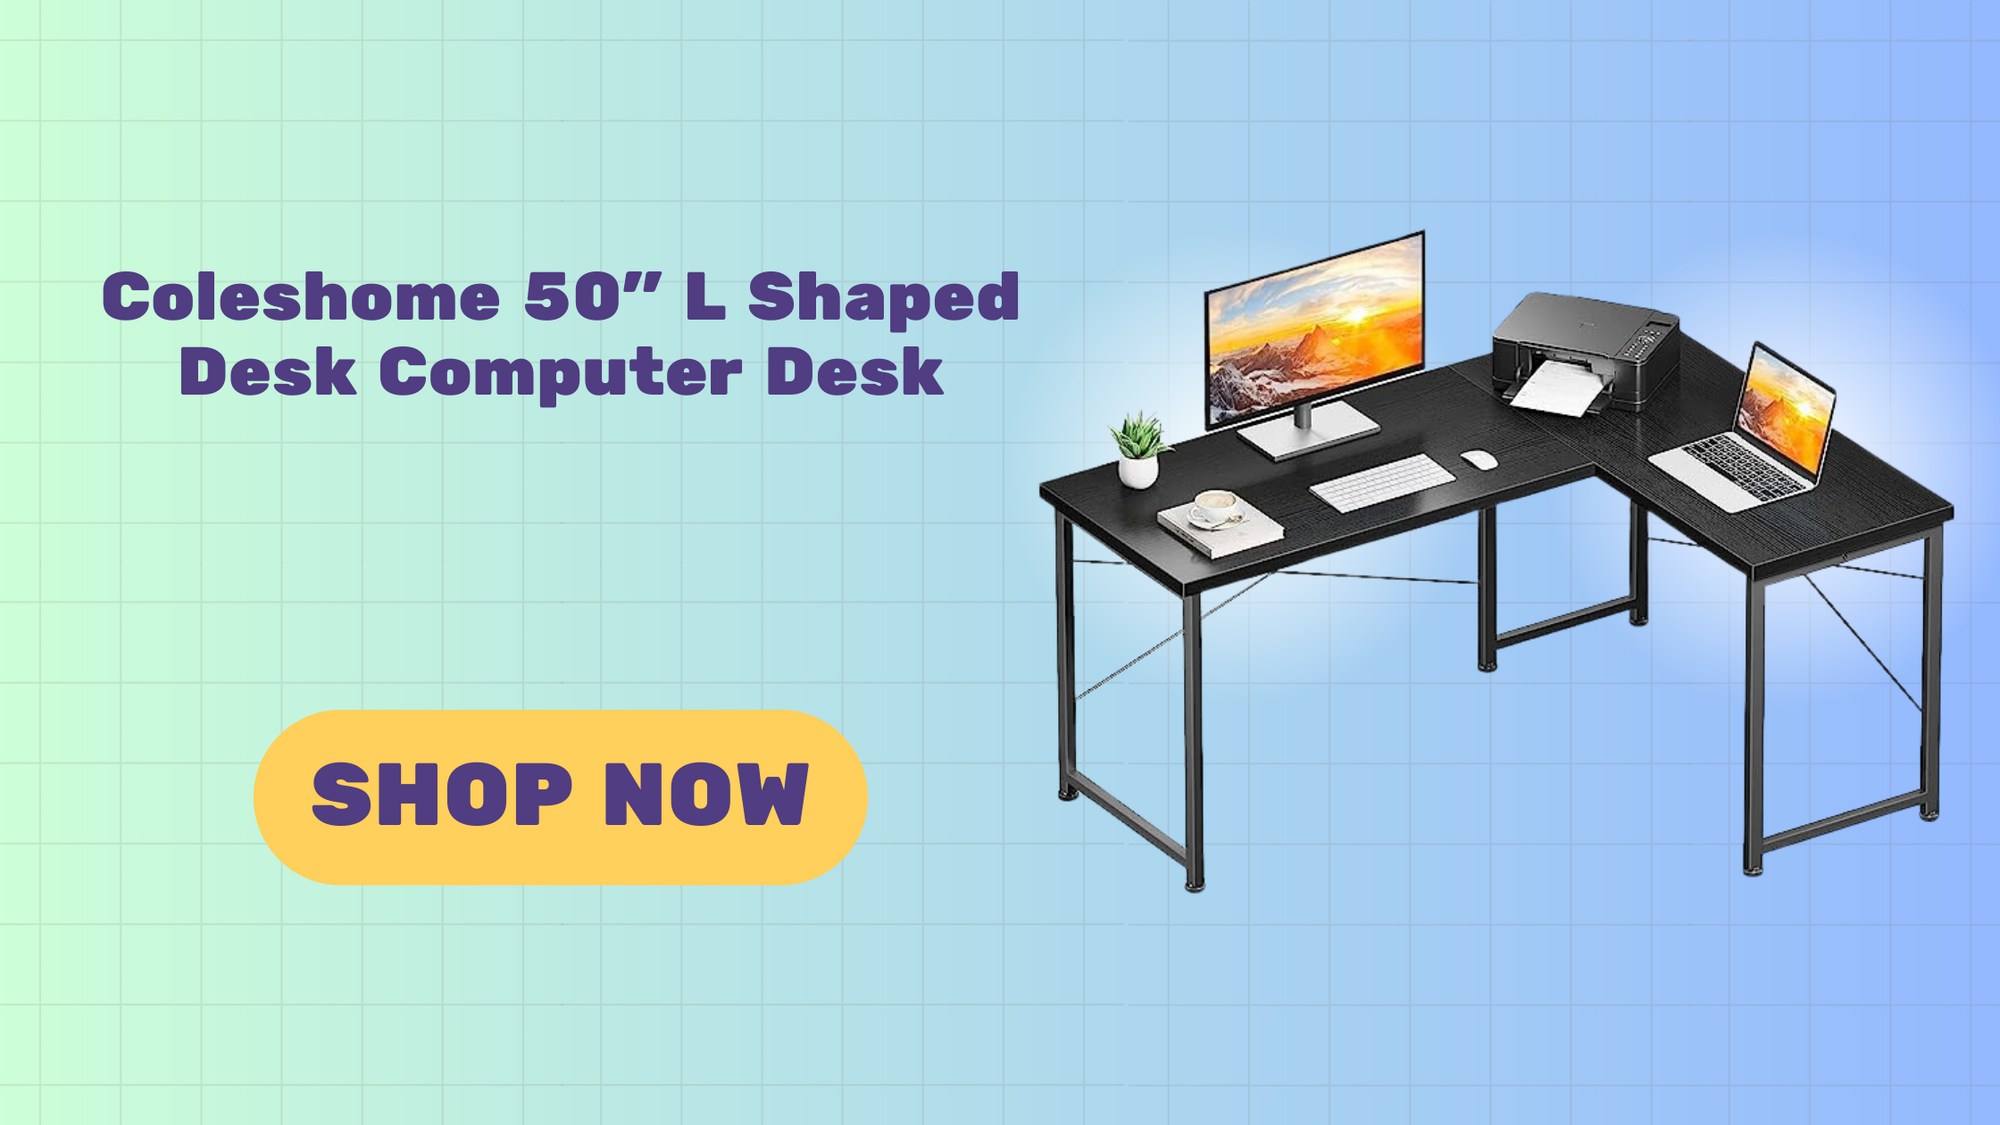 Coleshome 50" L Shaped Desk Computer Desk